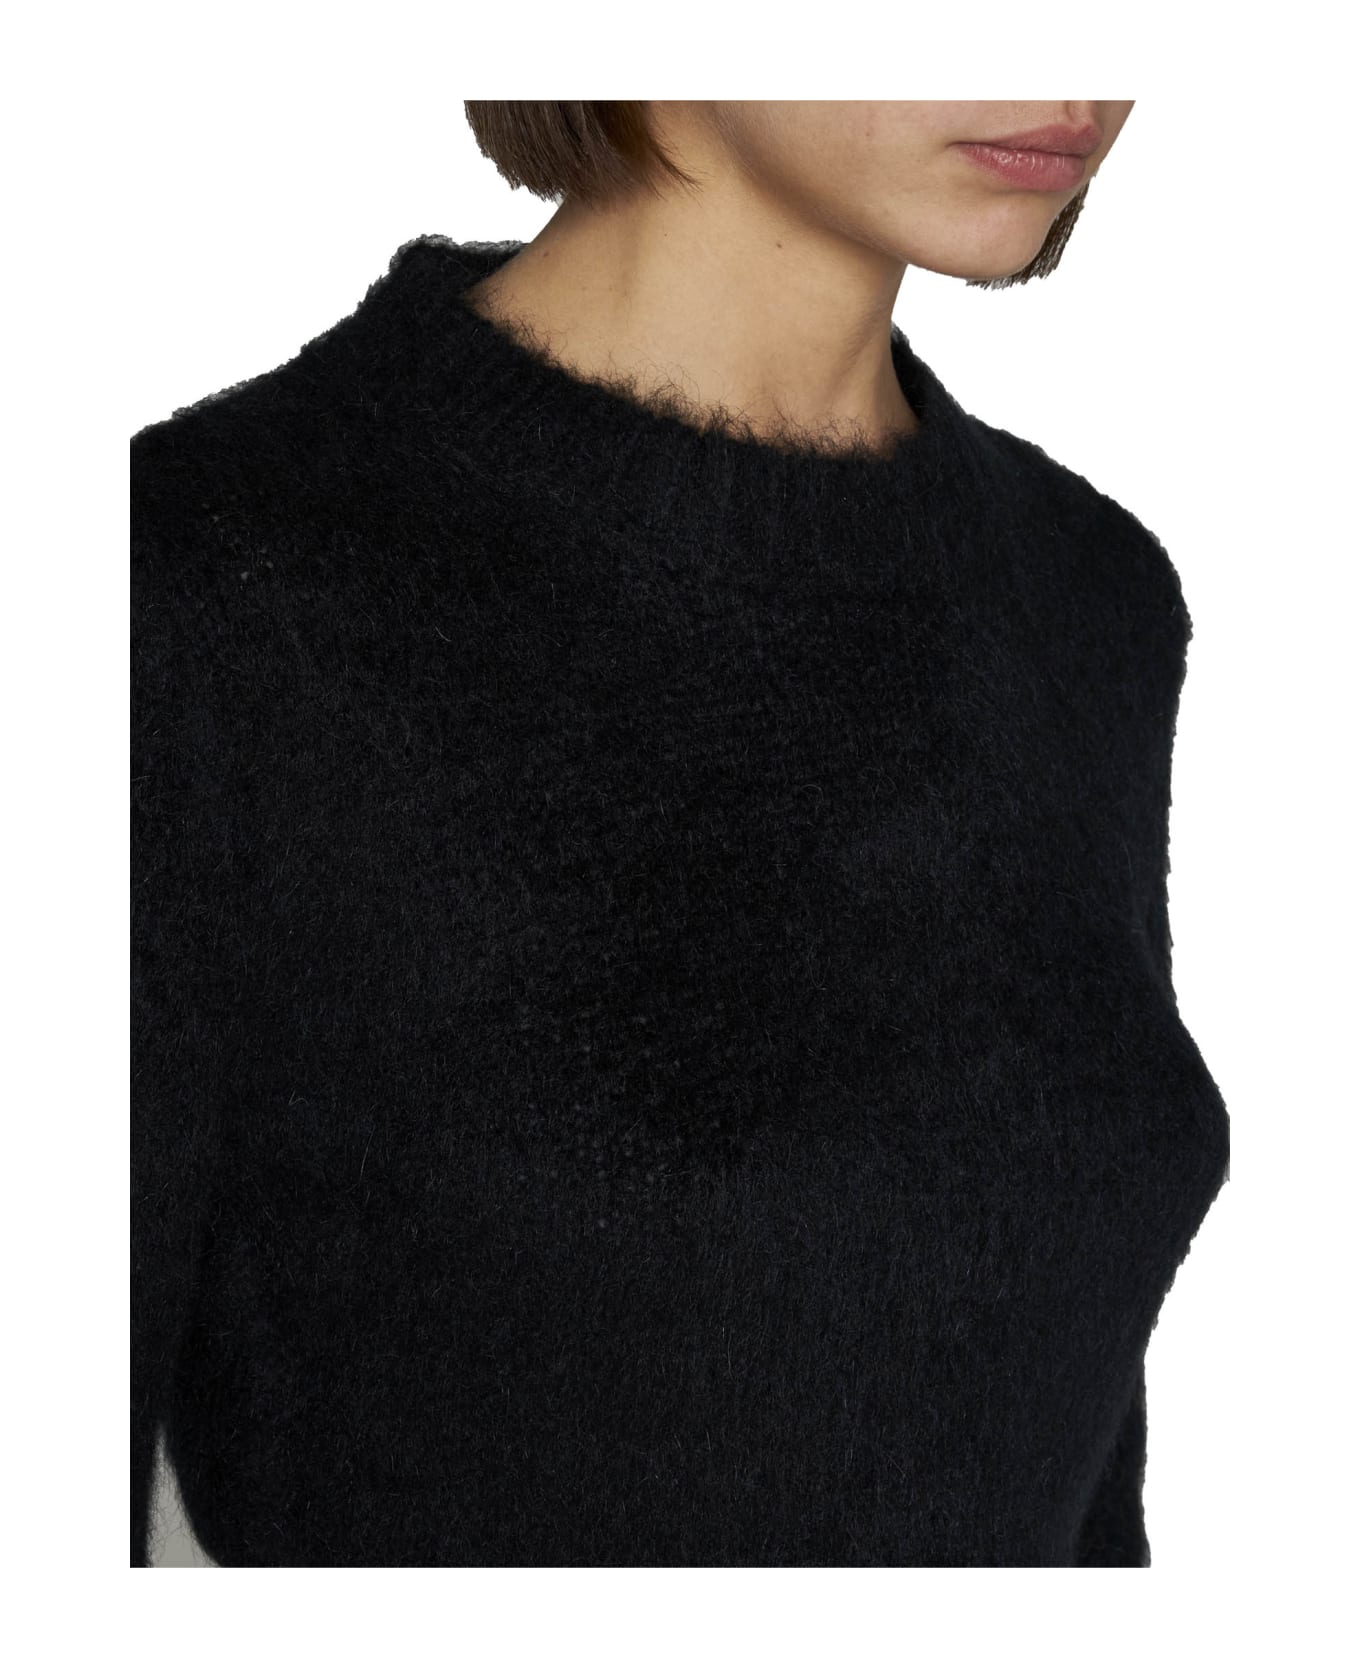 Marni Sweater - Black ニットウェア